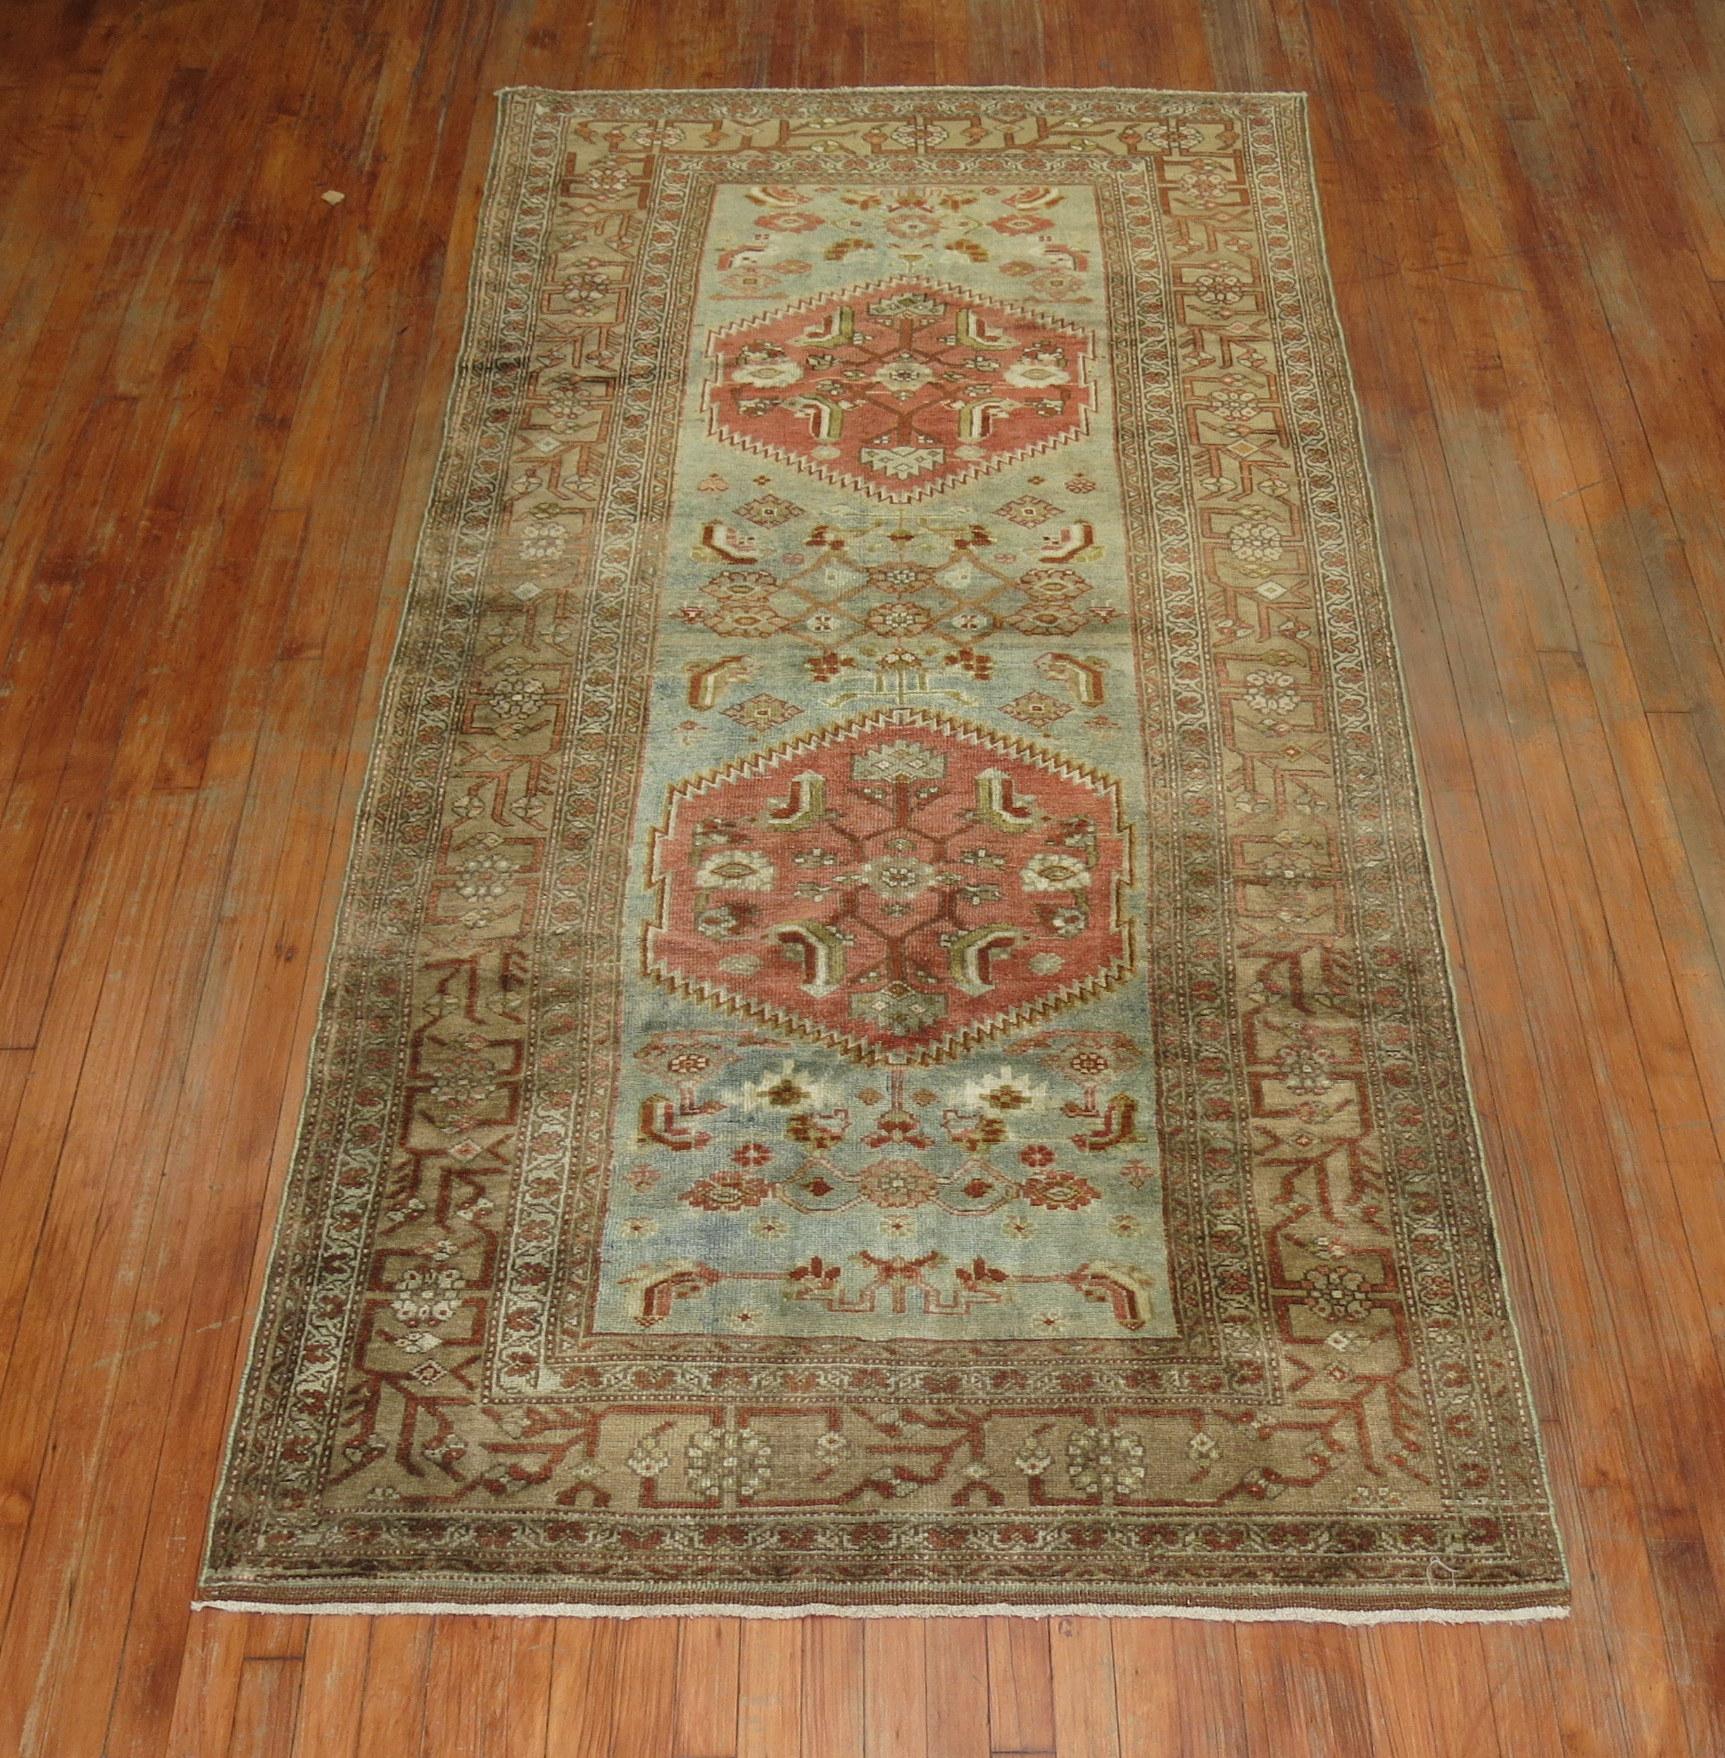 Early 20th century Persian Malayer intermediate size rug.

   